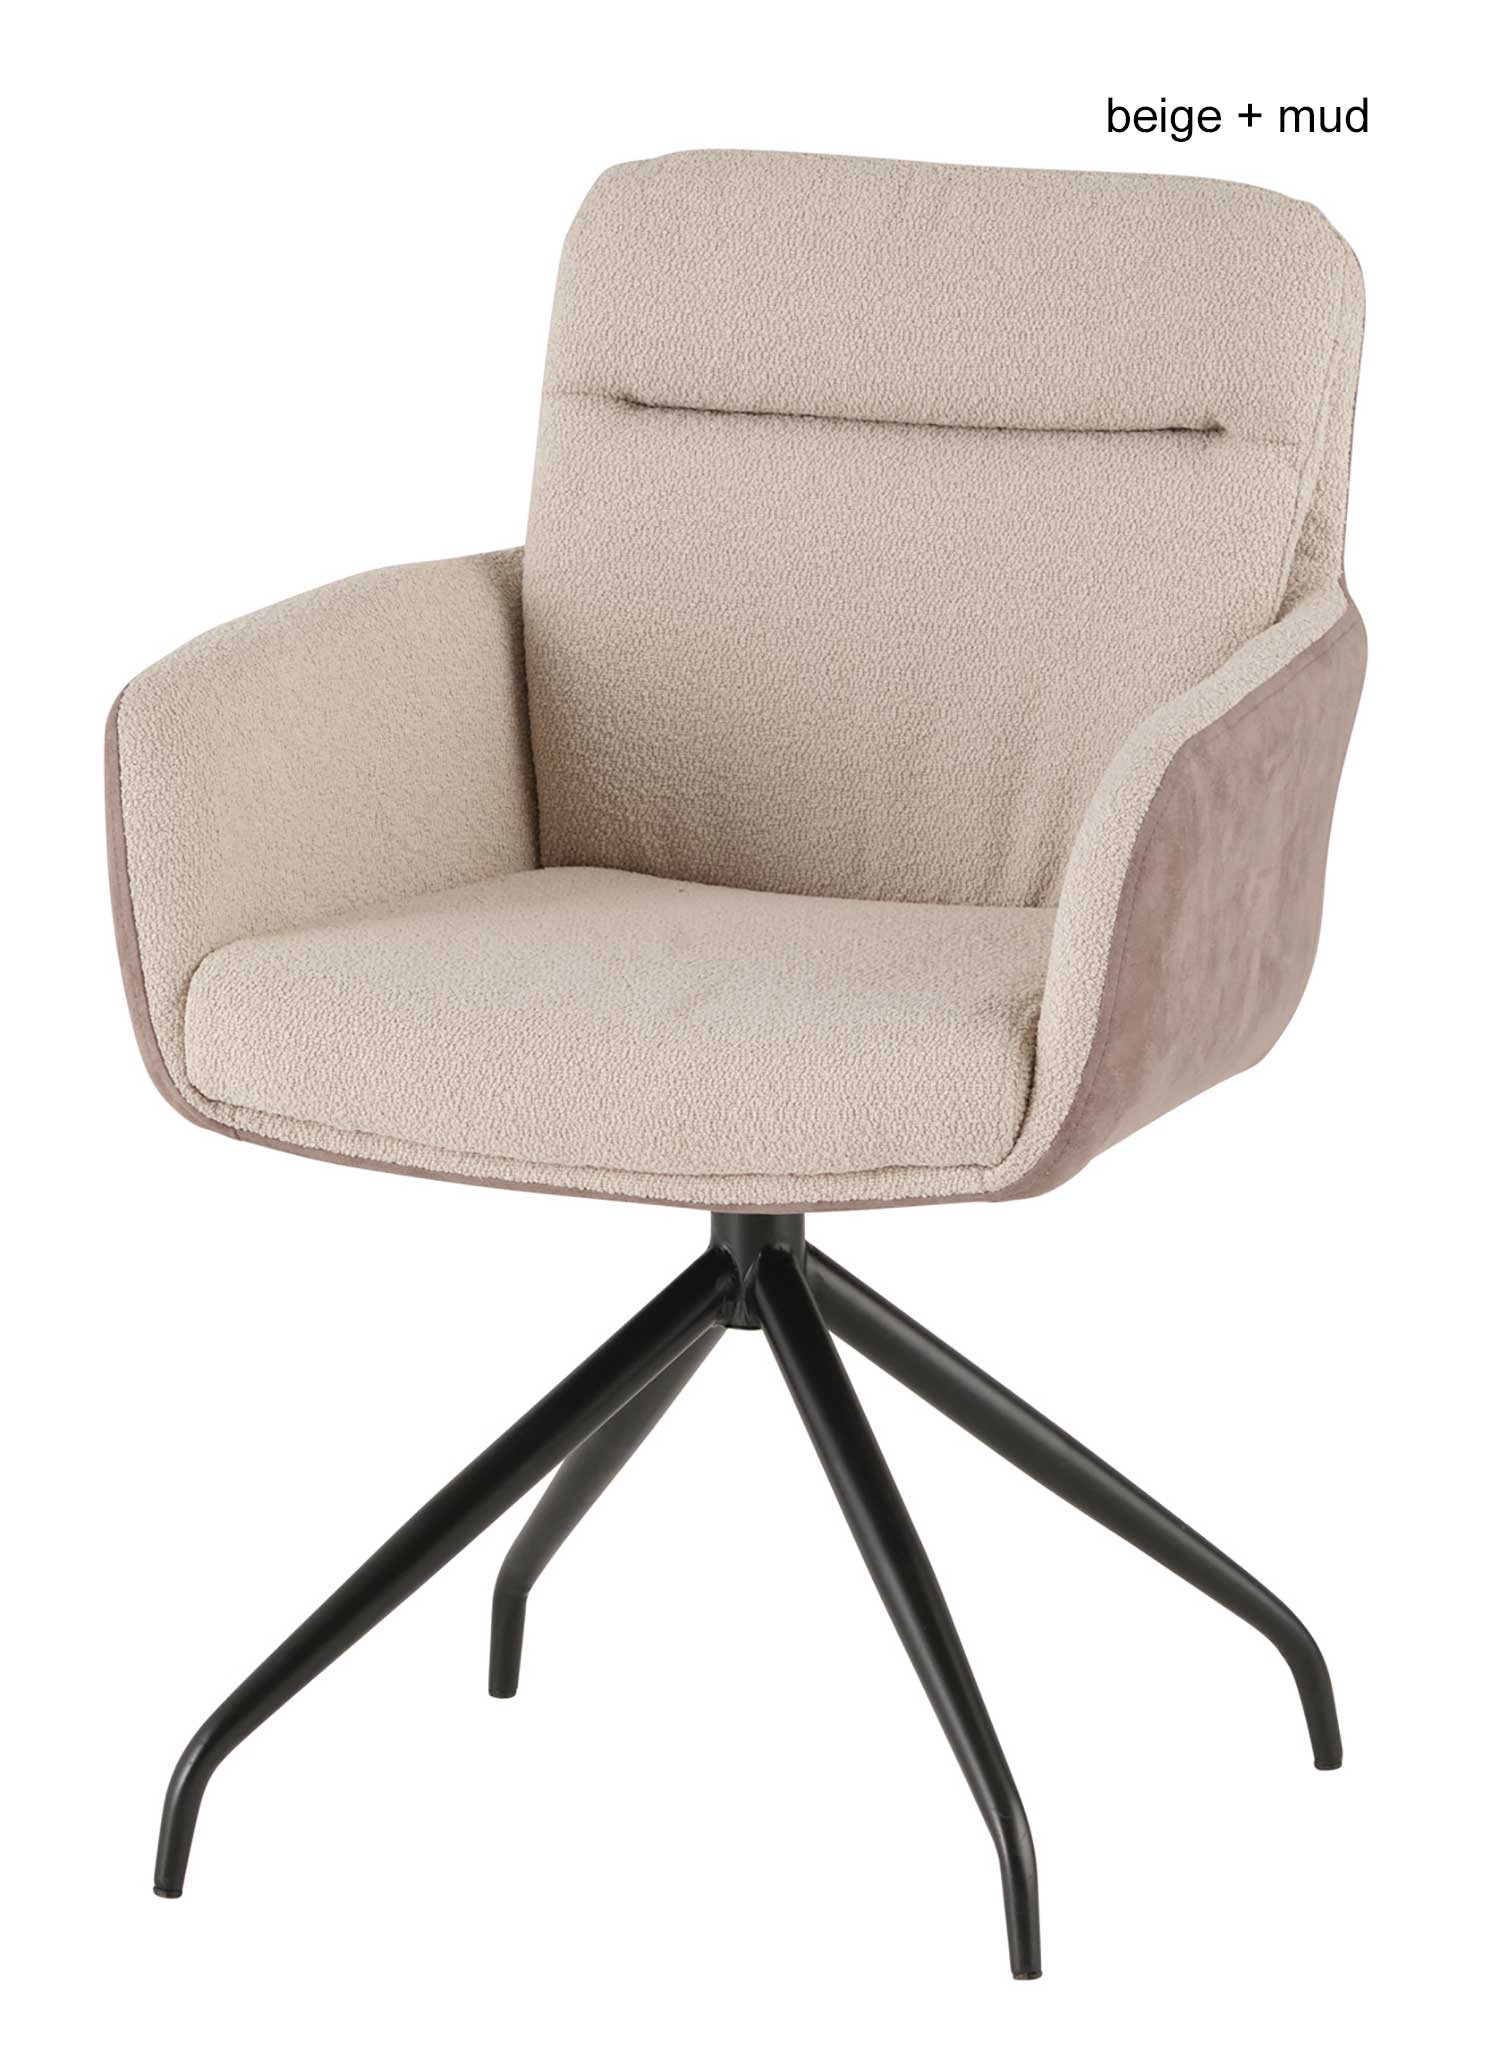 La Chair Senn Armlehnstuhl drehbar 2farbig beige